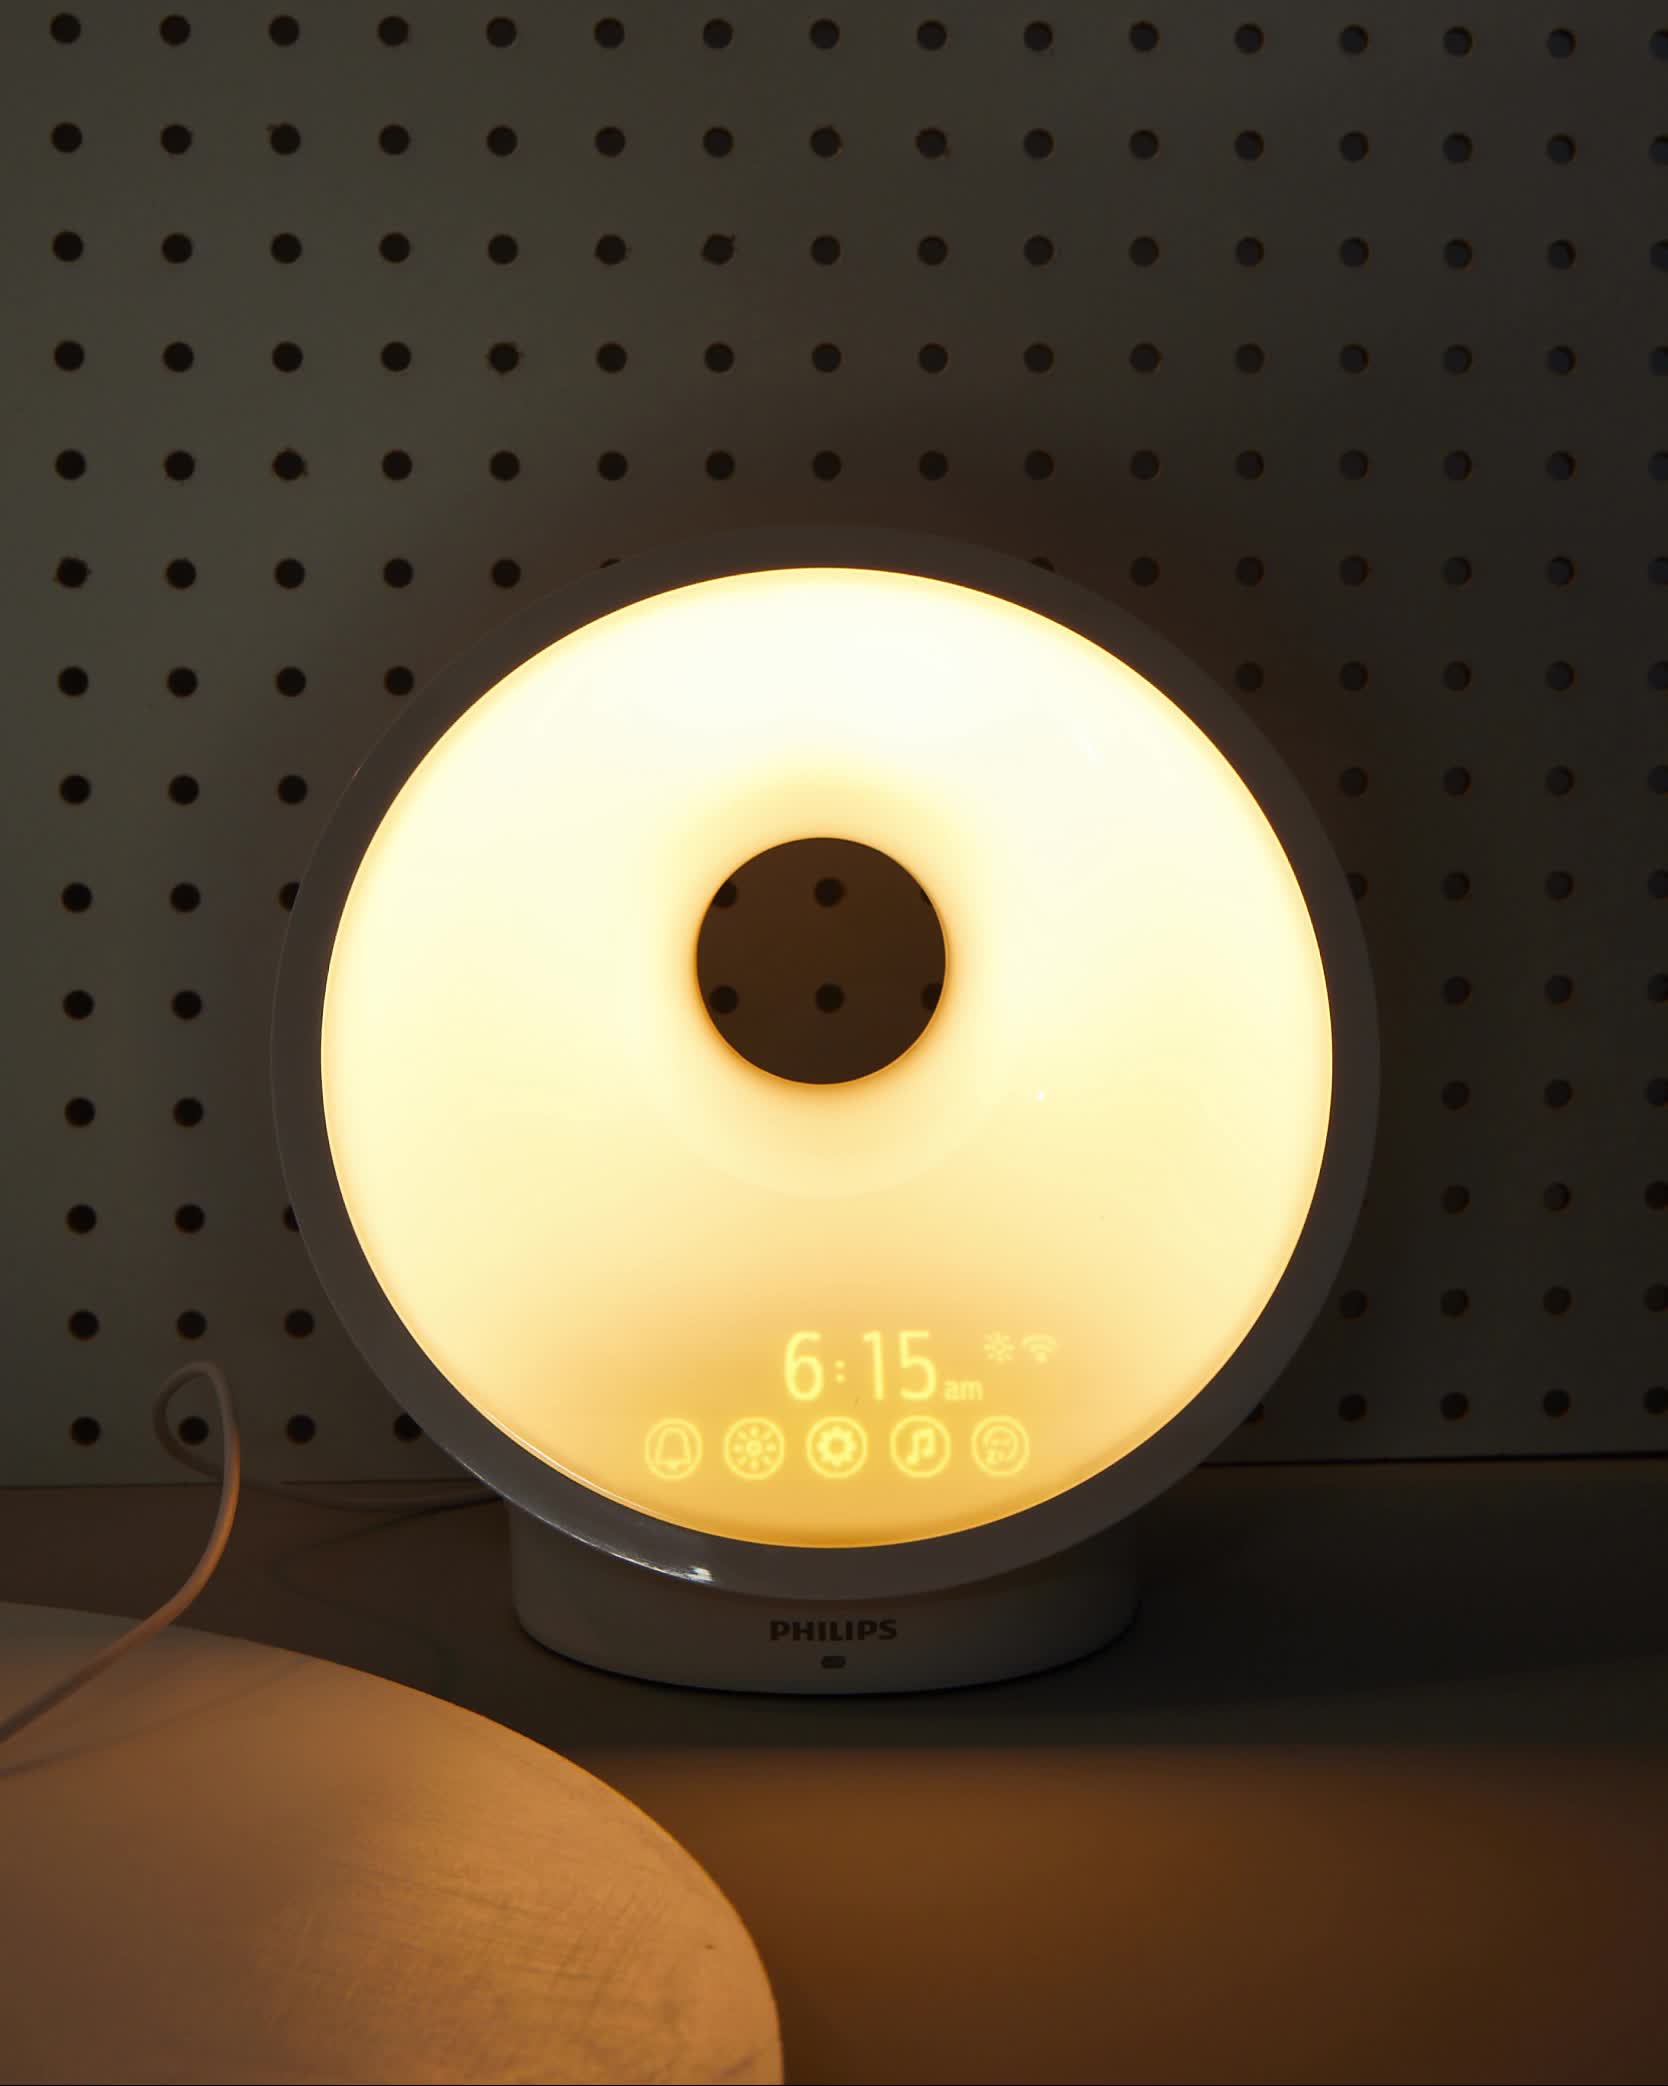 Philips SmartSleep Wake-Up Alarm Light App Makes Mornings Easier